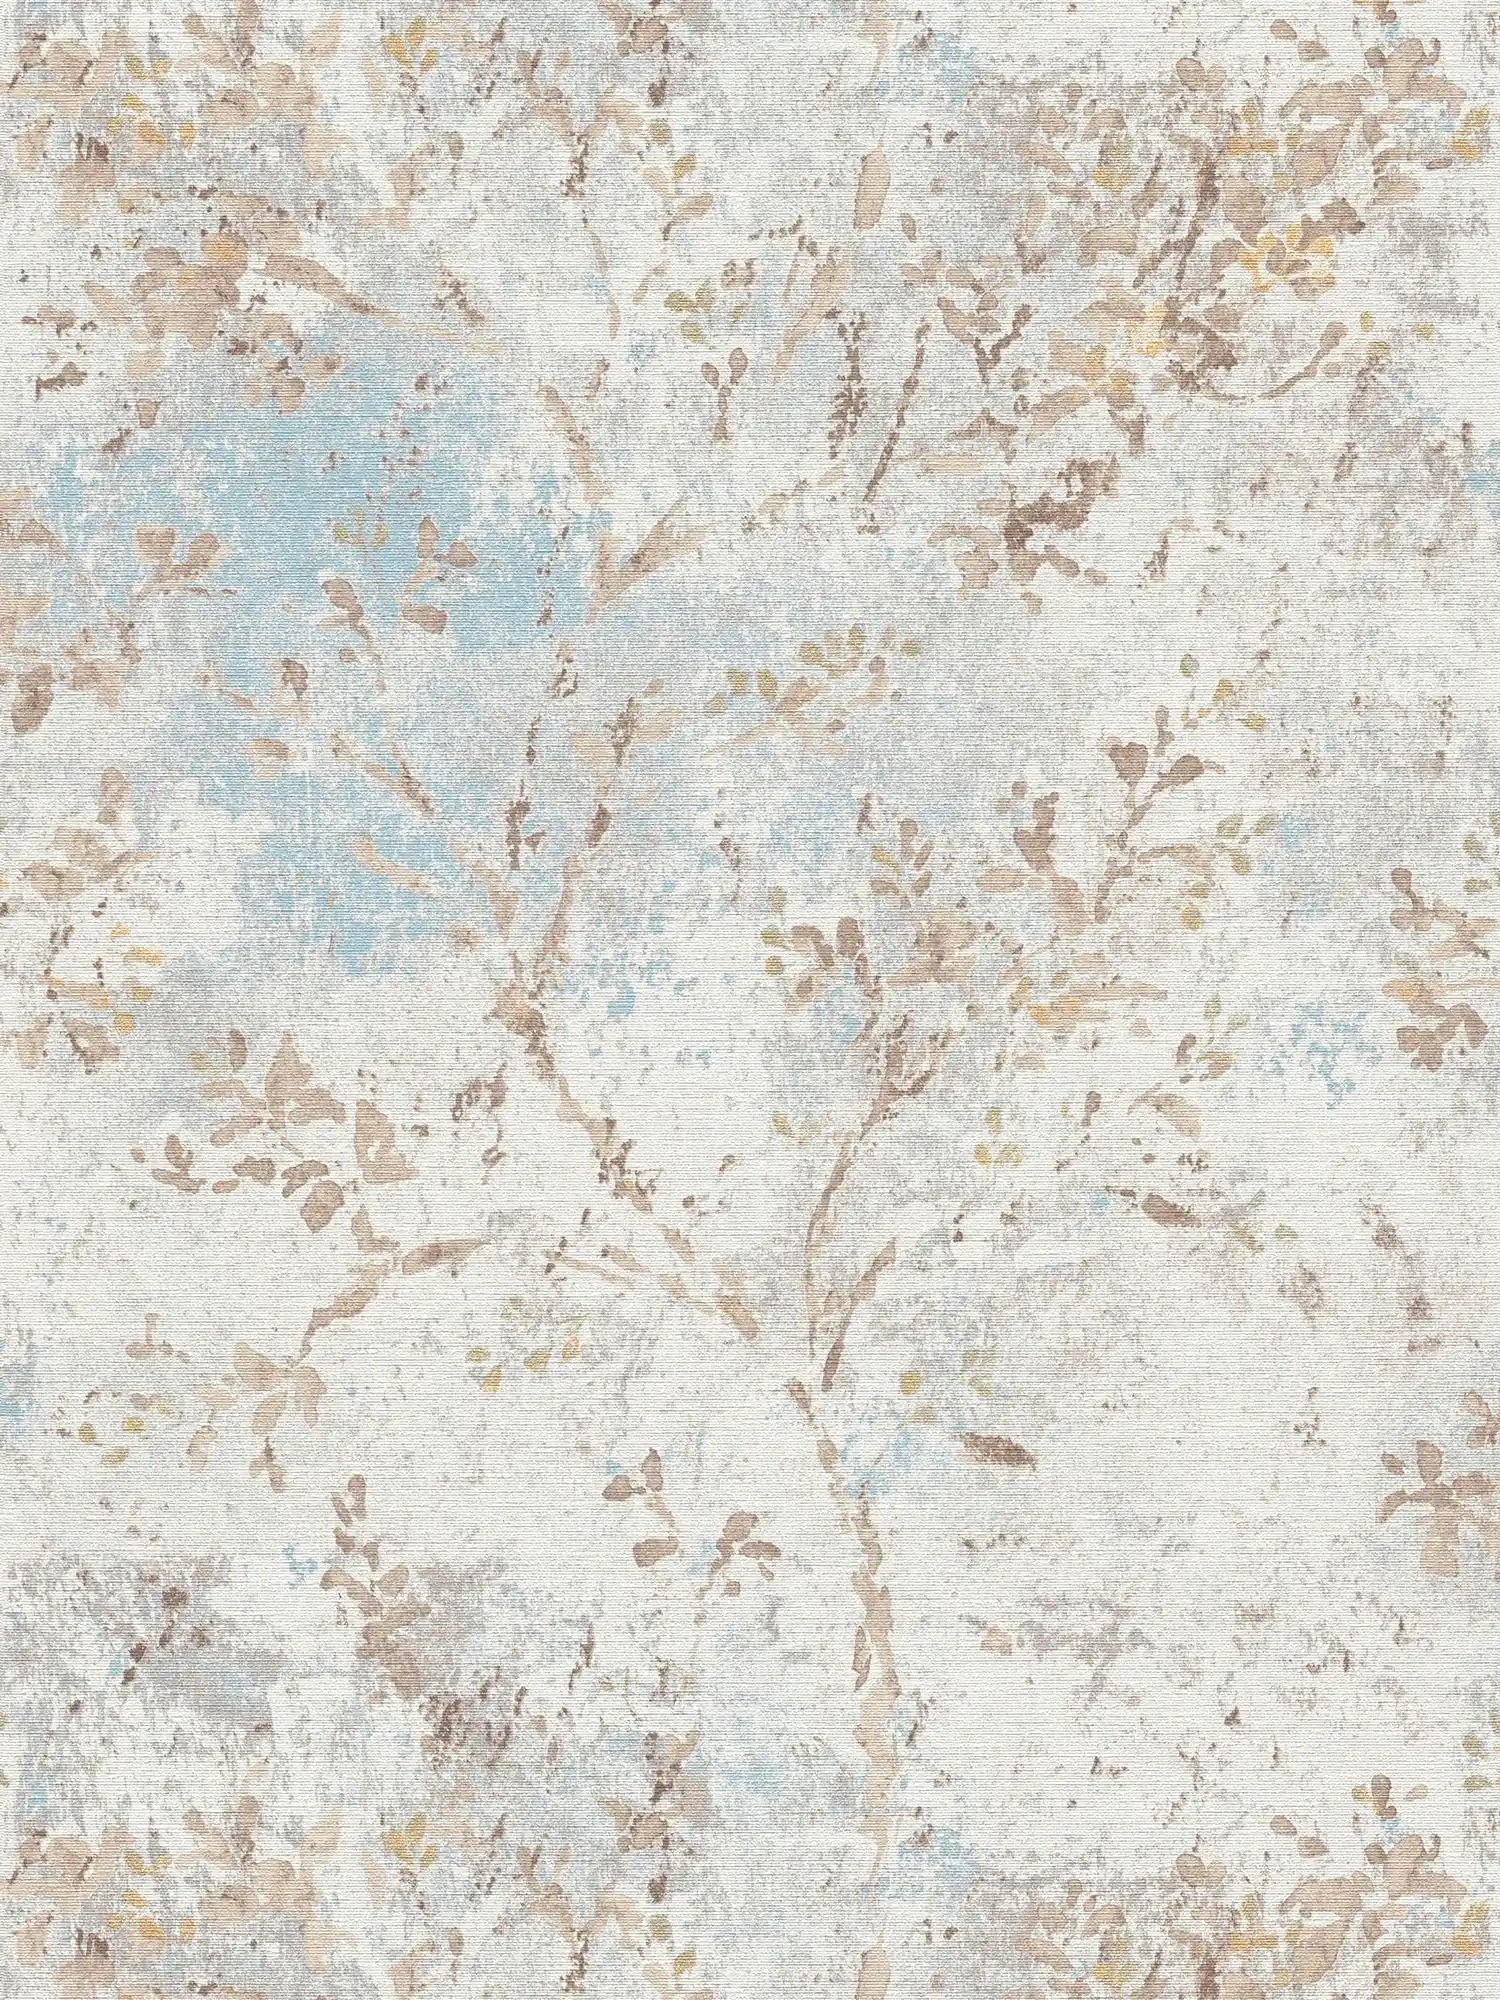         Vliestapete mit floraler Aquarell Optik – Blau, Beige, Gold
    